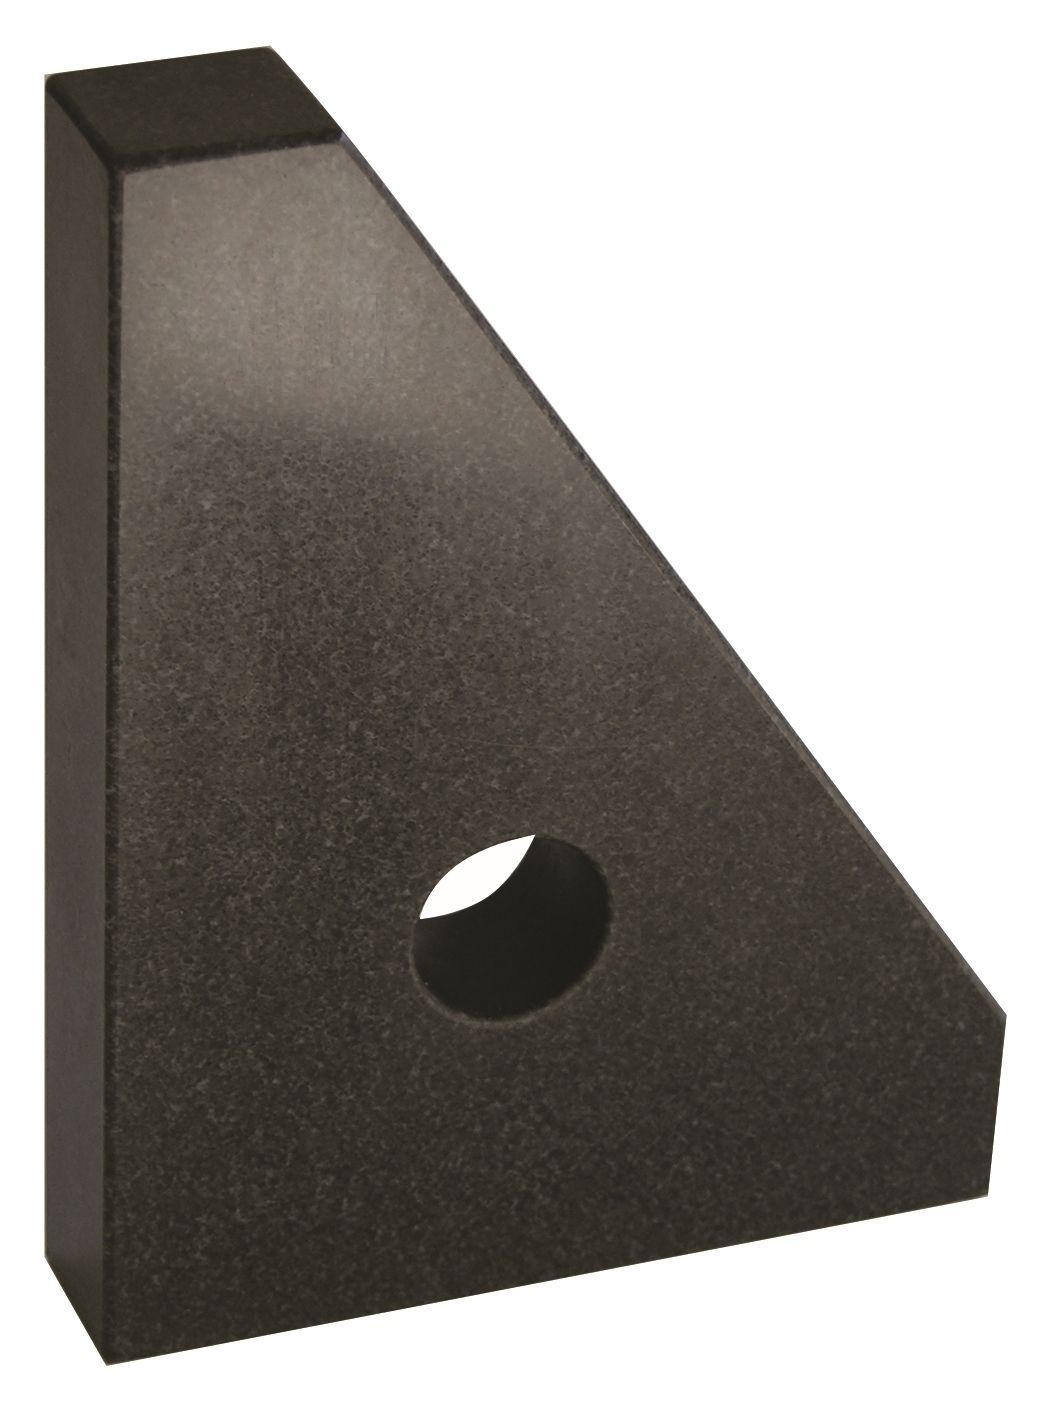 Präzisions-Winkel aus Granit 1000 x 630 x 80 mm | DIN 875-0